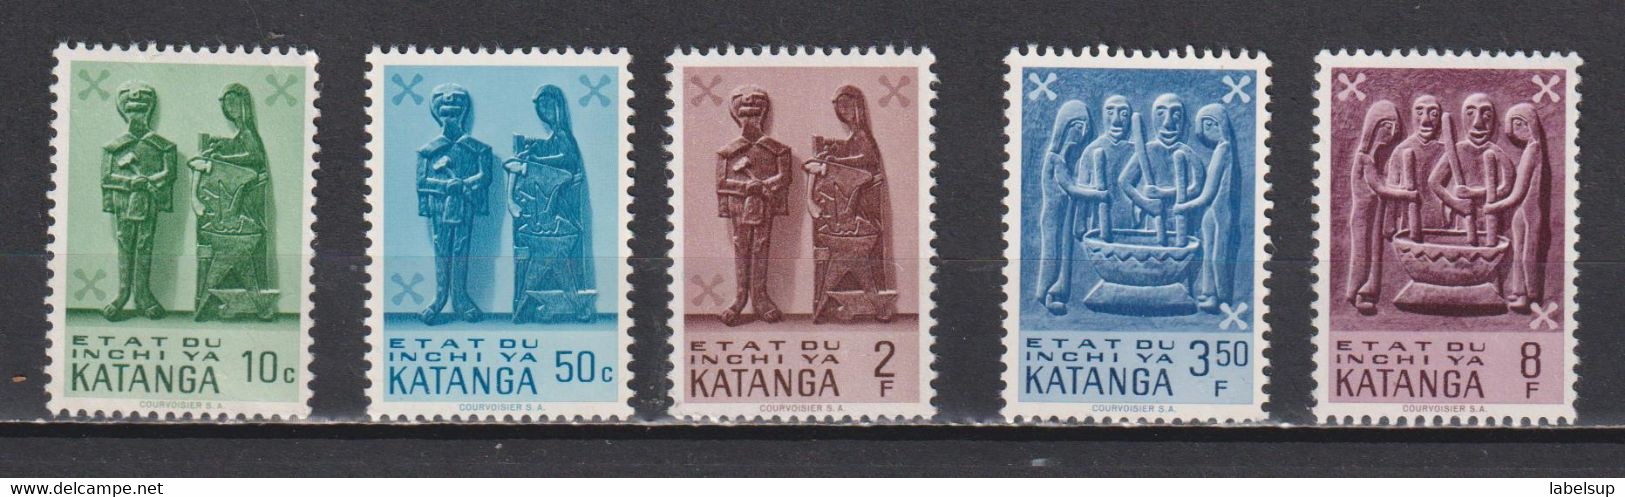 Timbres Neuf** Du Katanga De 1961 N° MNH - Katanga